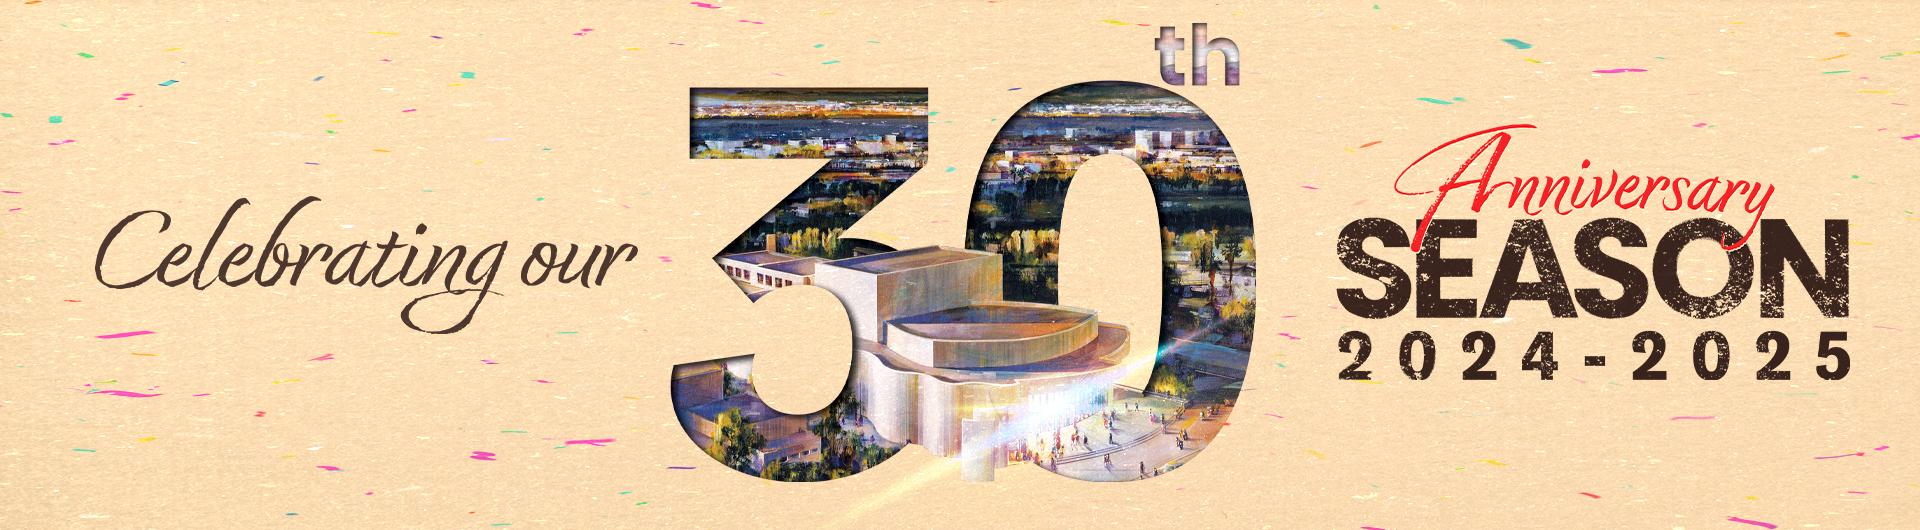 Celebrating our 30th Anniversary Season 2024-2025